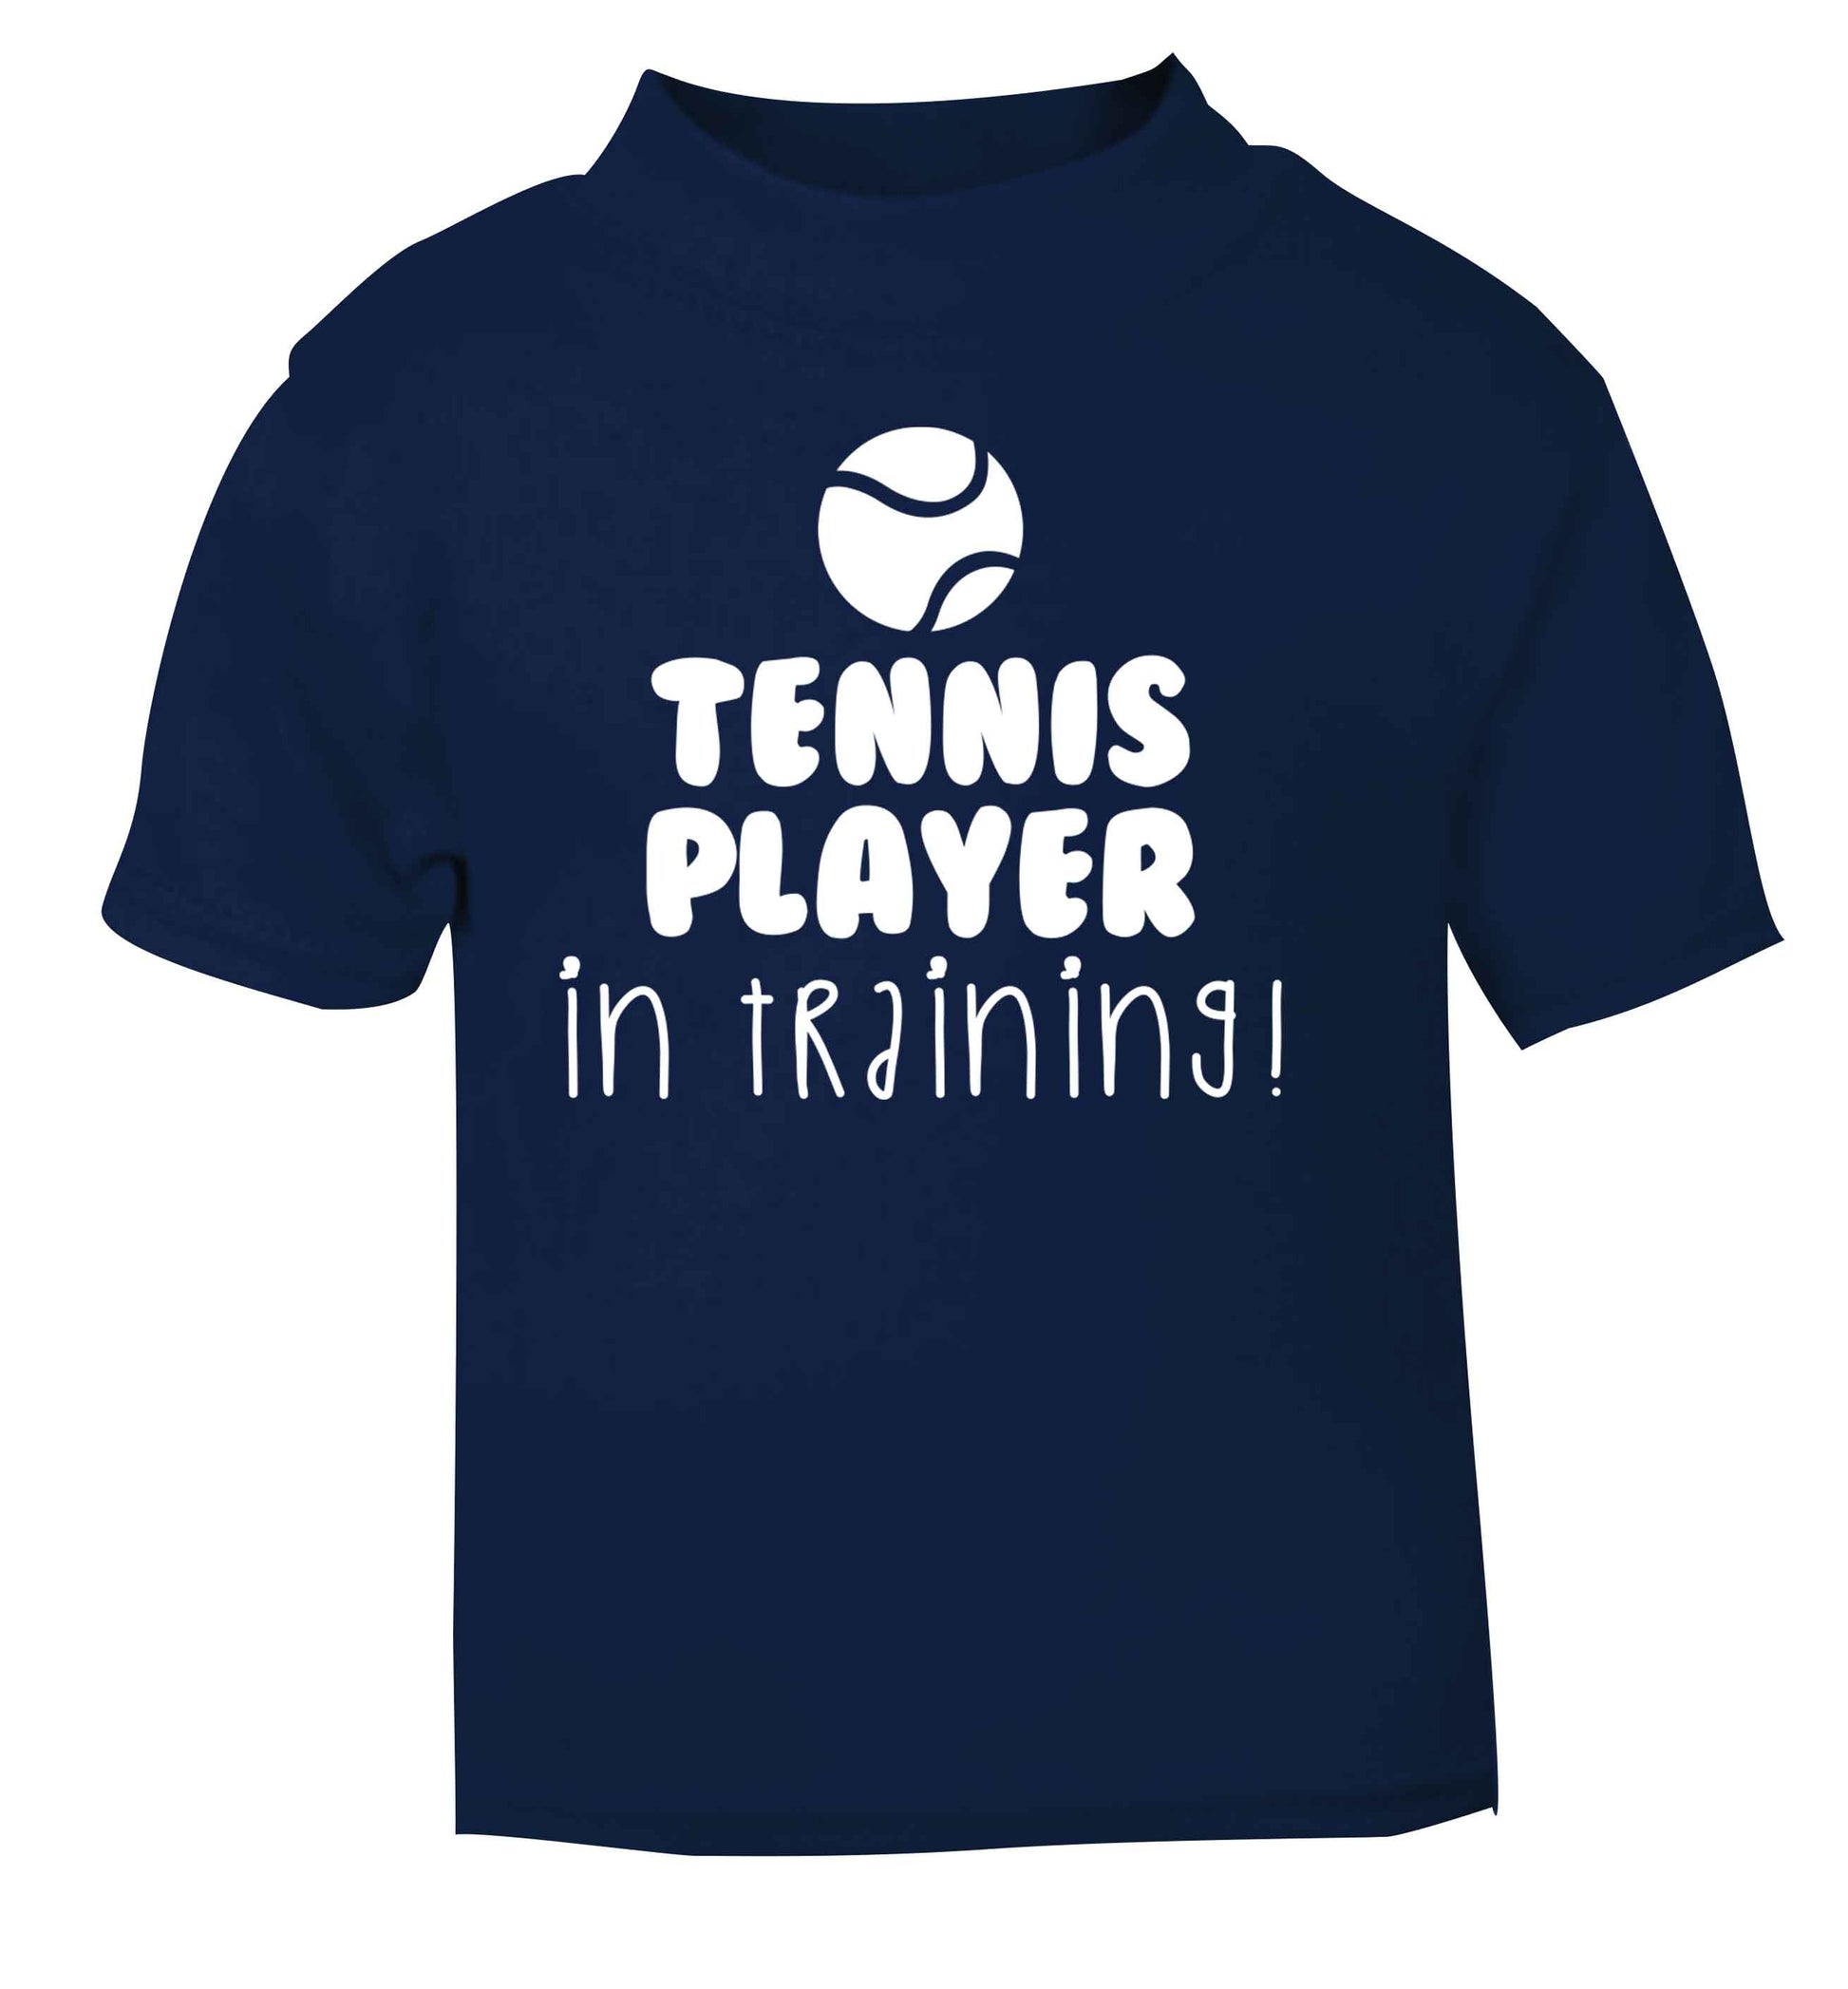 Tennis player in training navy Baby Toddler Tshirt 2 Years